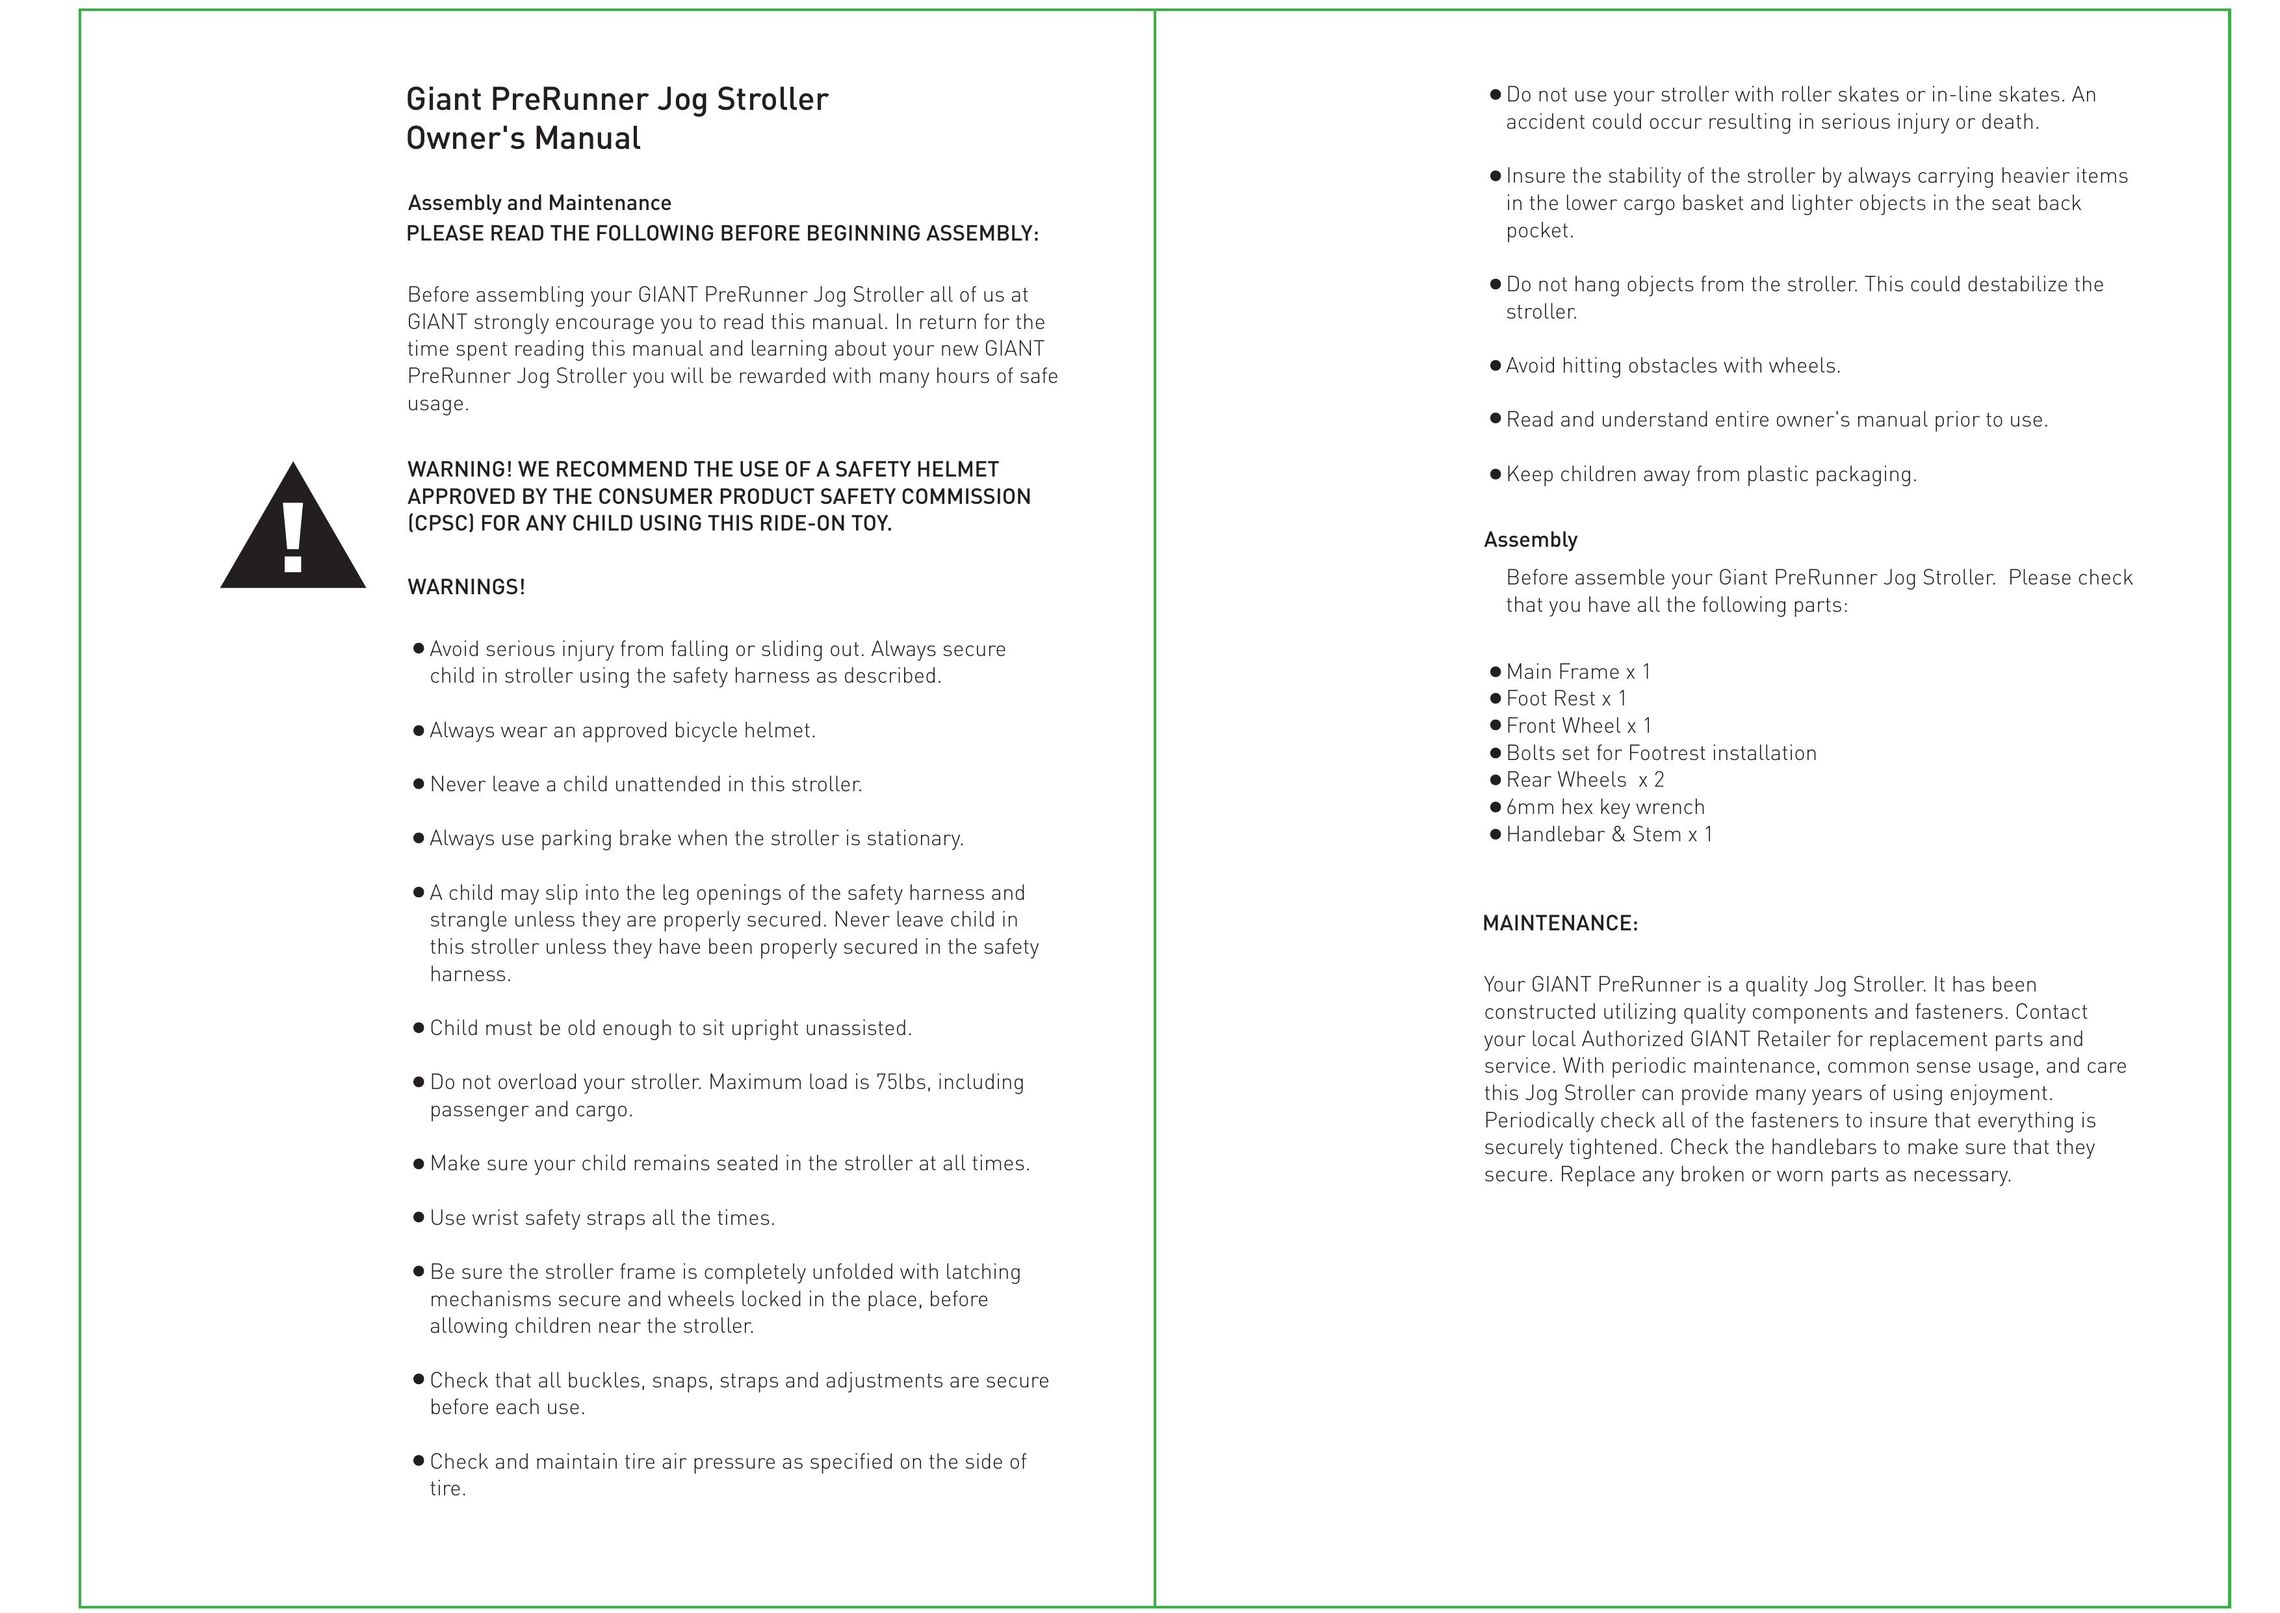 Giant PreRunner Jog Stroller Stroller User Manual (Page 1)